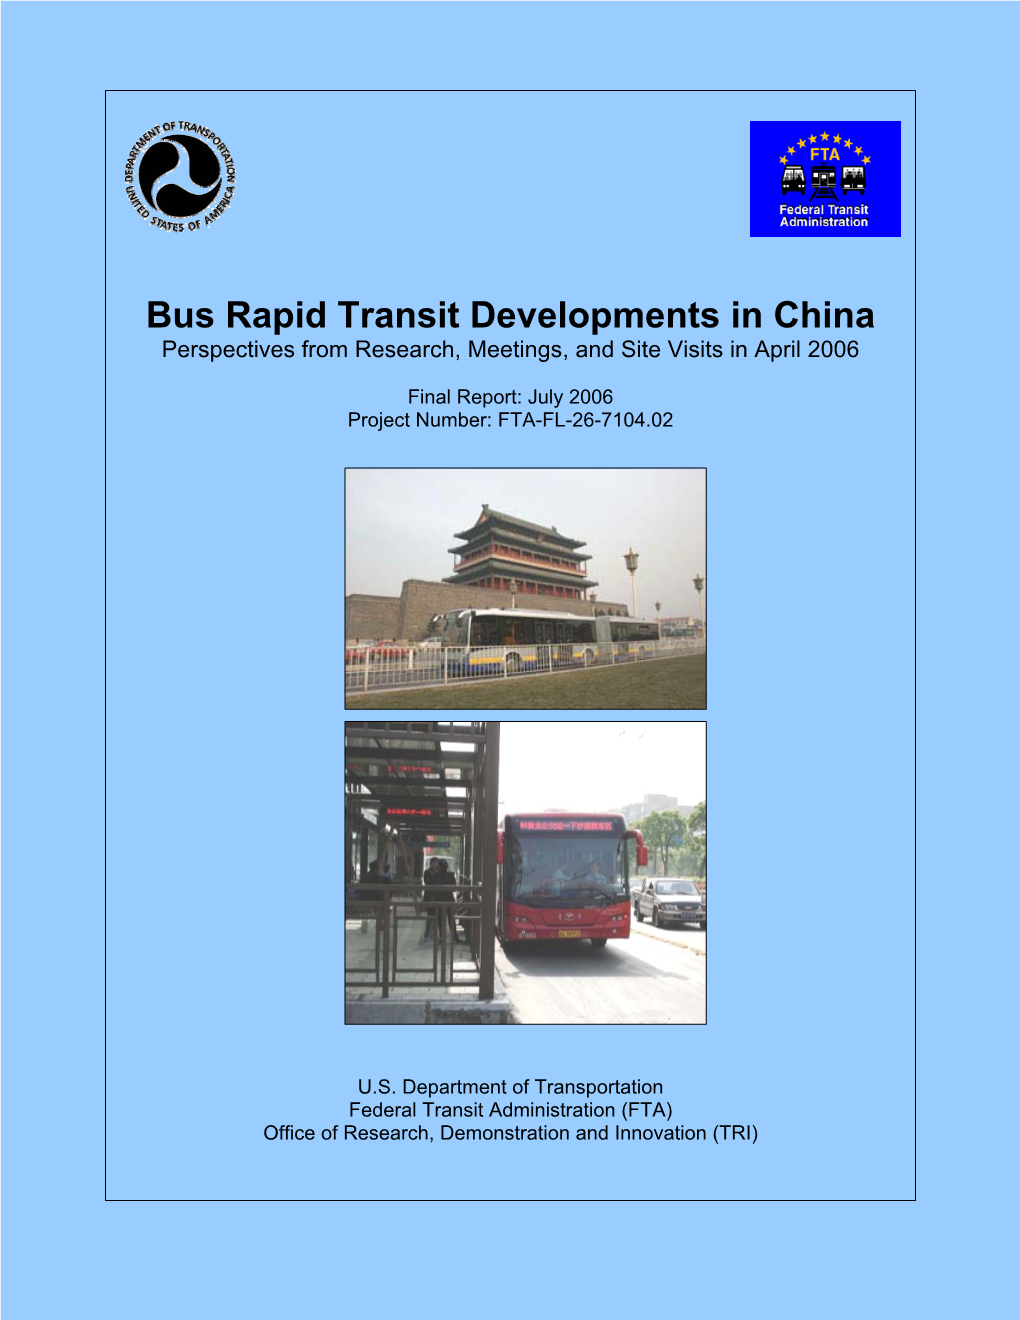 China Bus Rapid Transit Developments Final Report